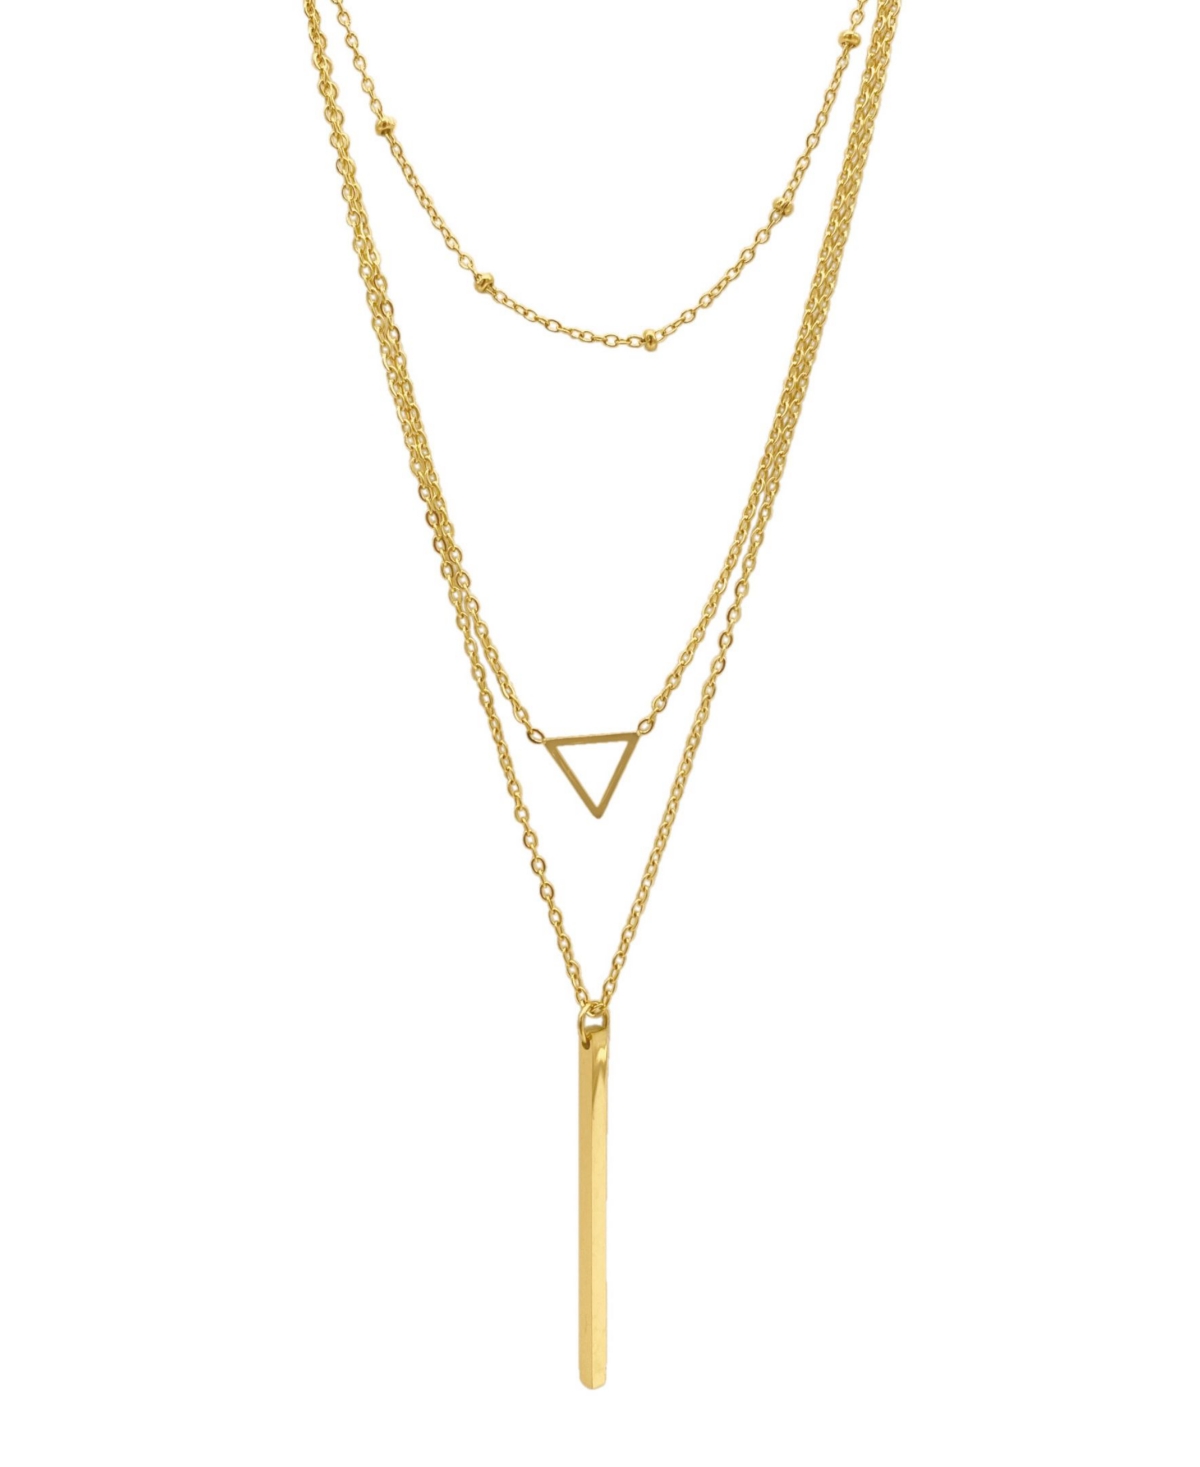 15-17" Adjustable 14K Gold Plated Layered Pendant Necklace Set - Gold